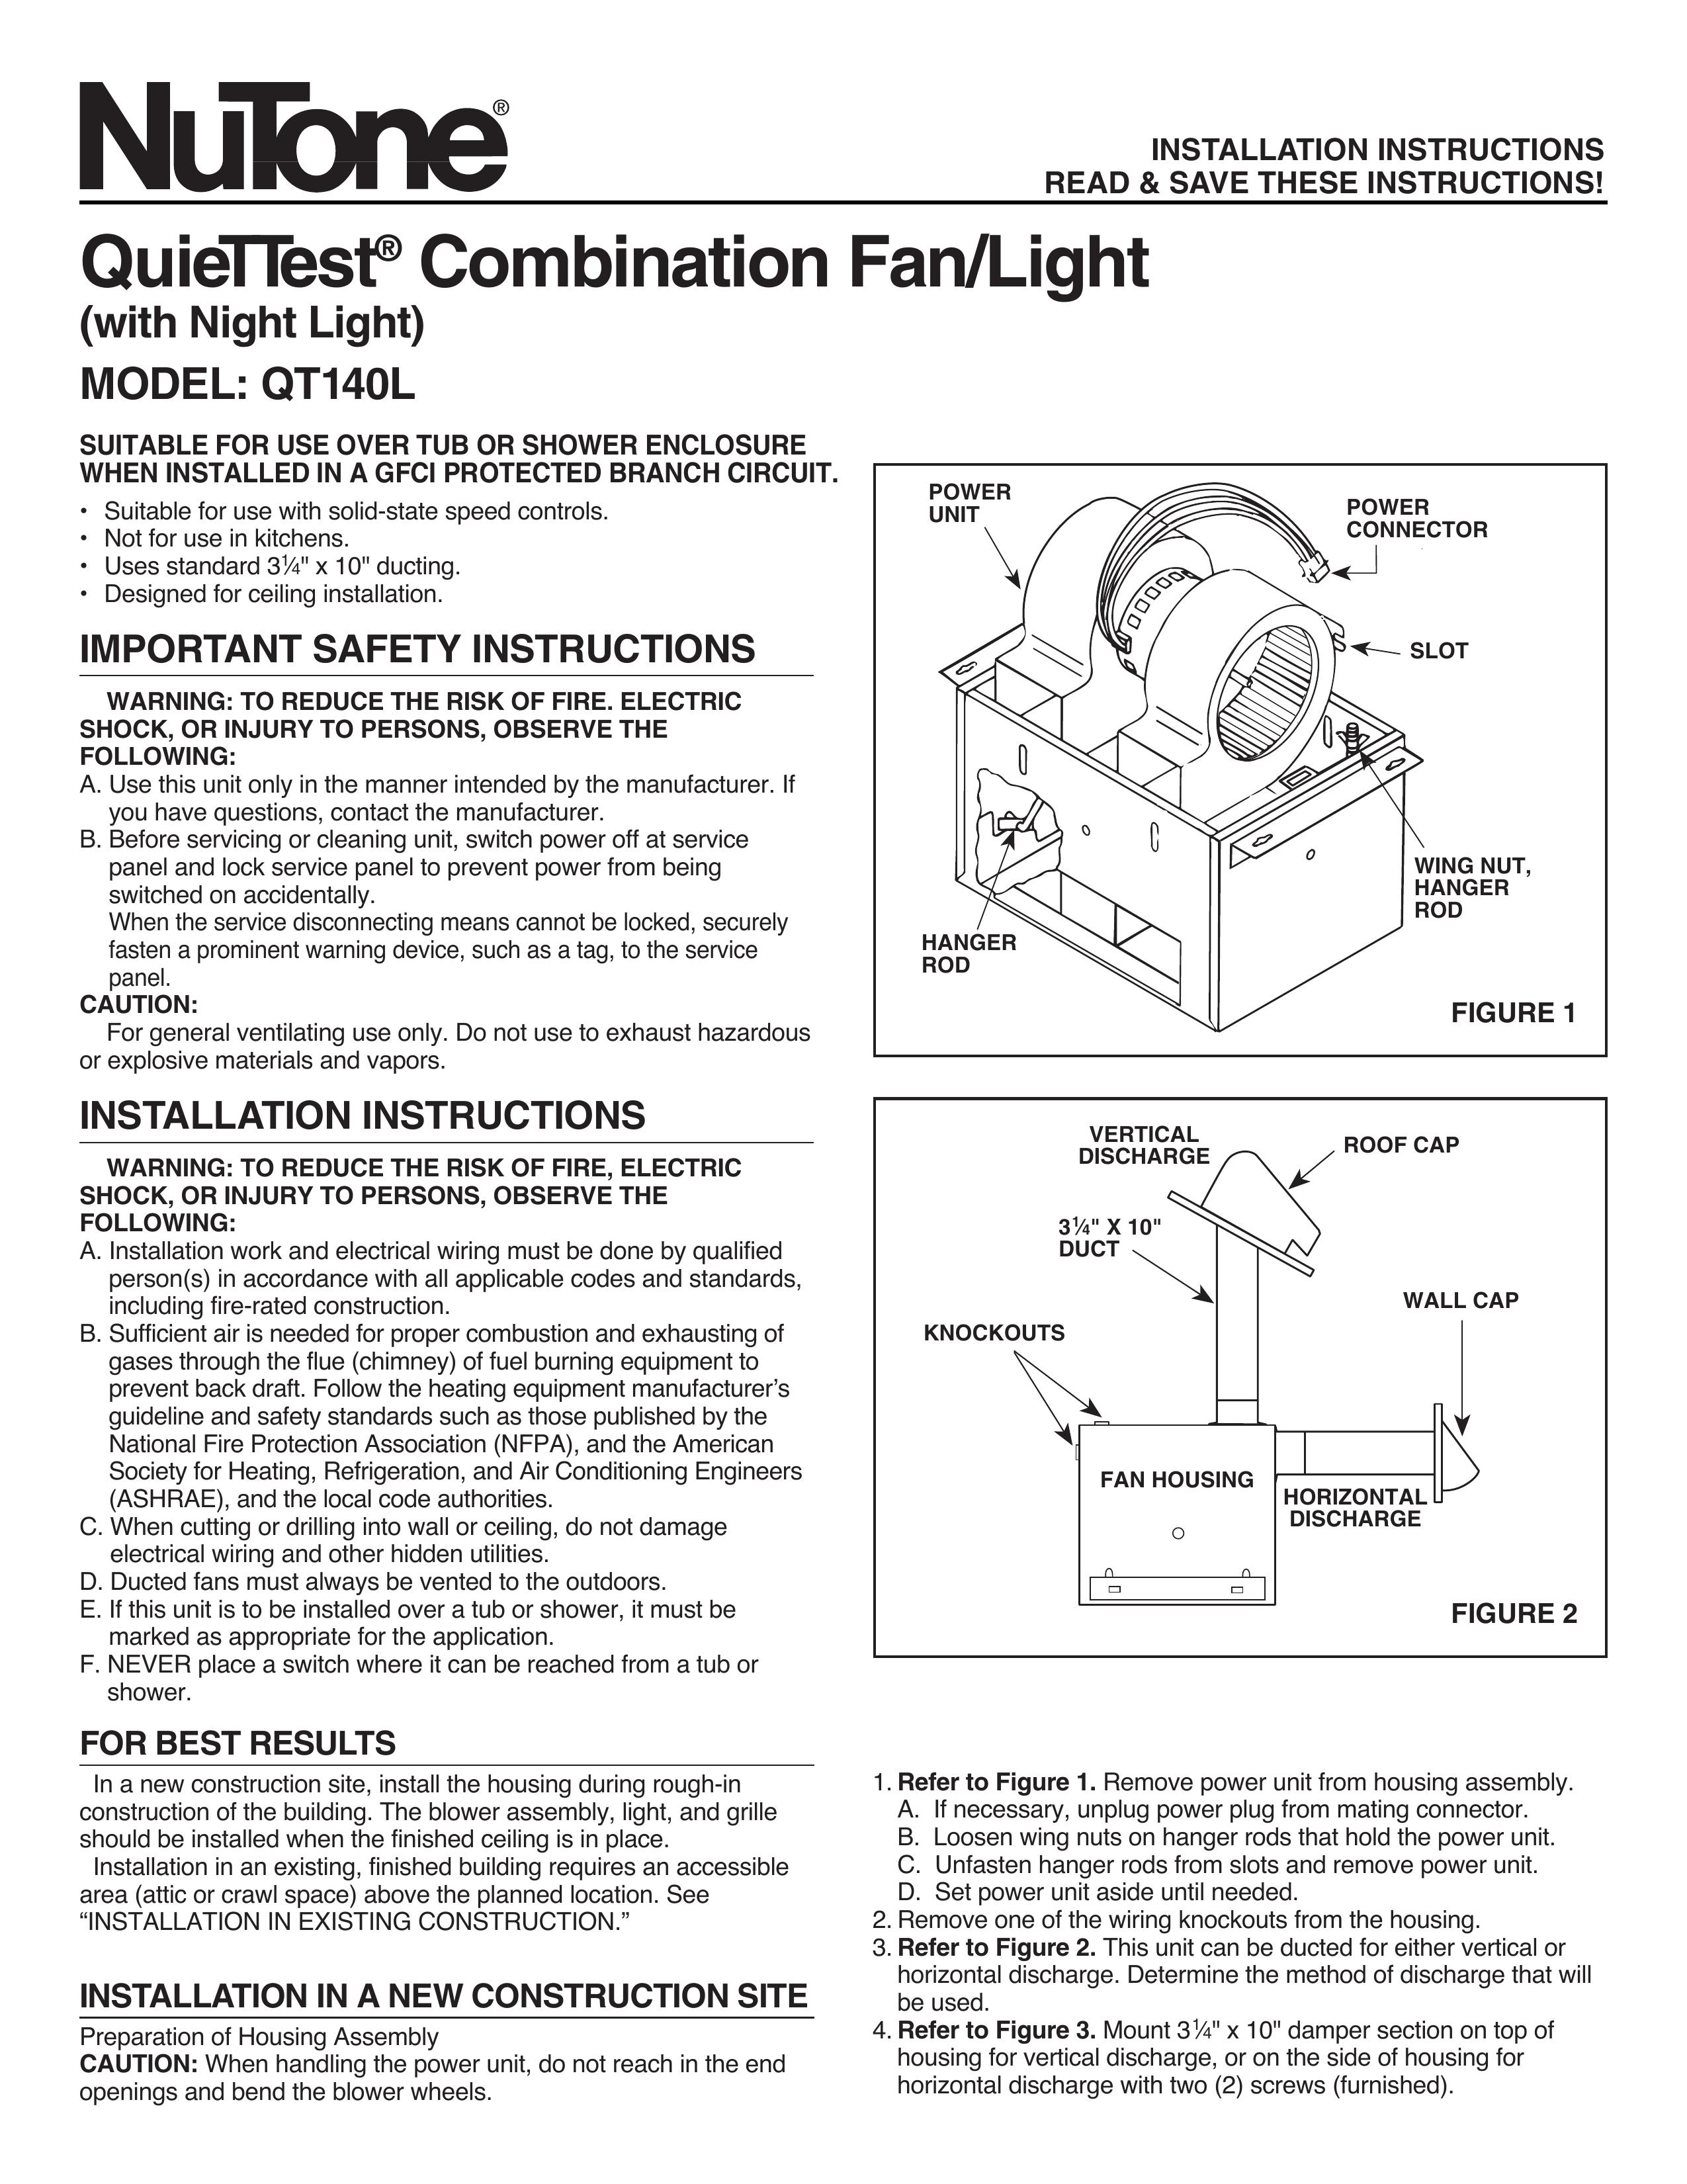 NuTone QT140L Landscape Lighting User Manual